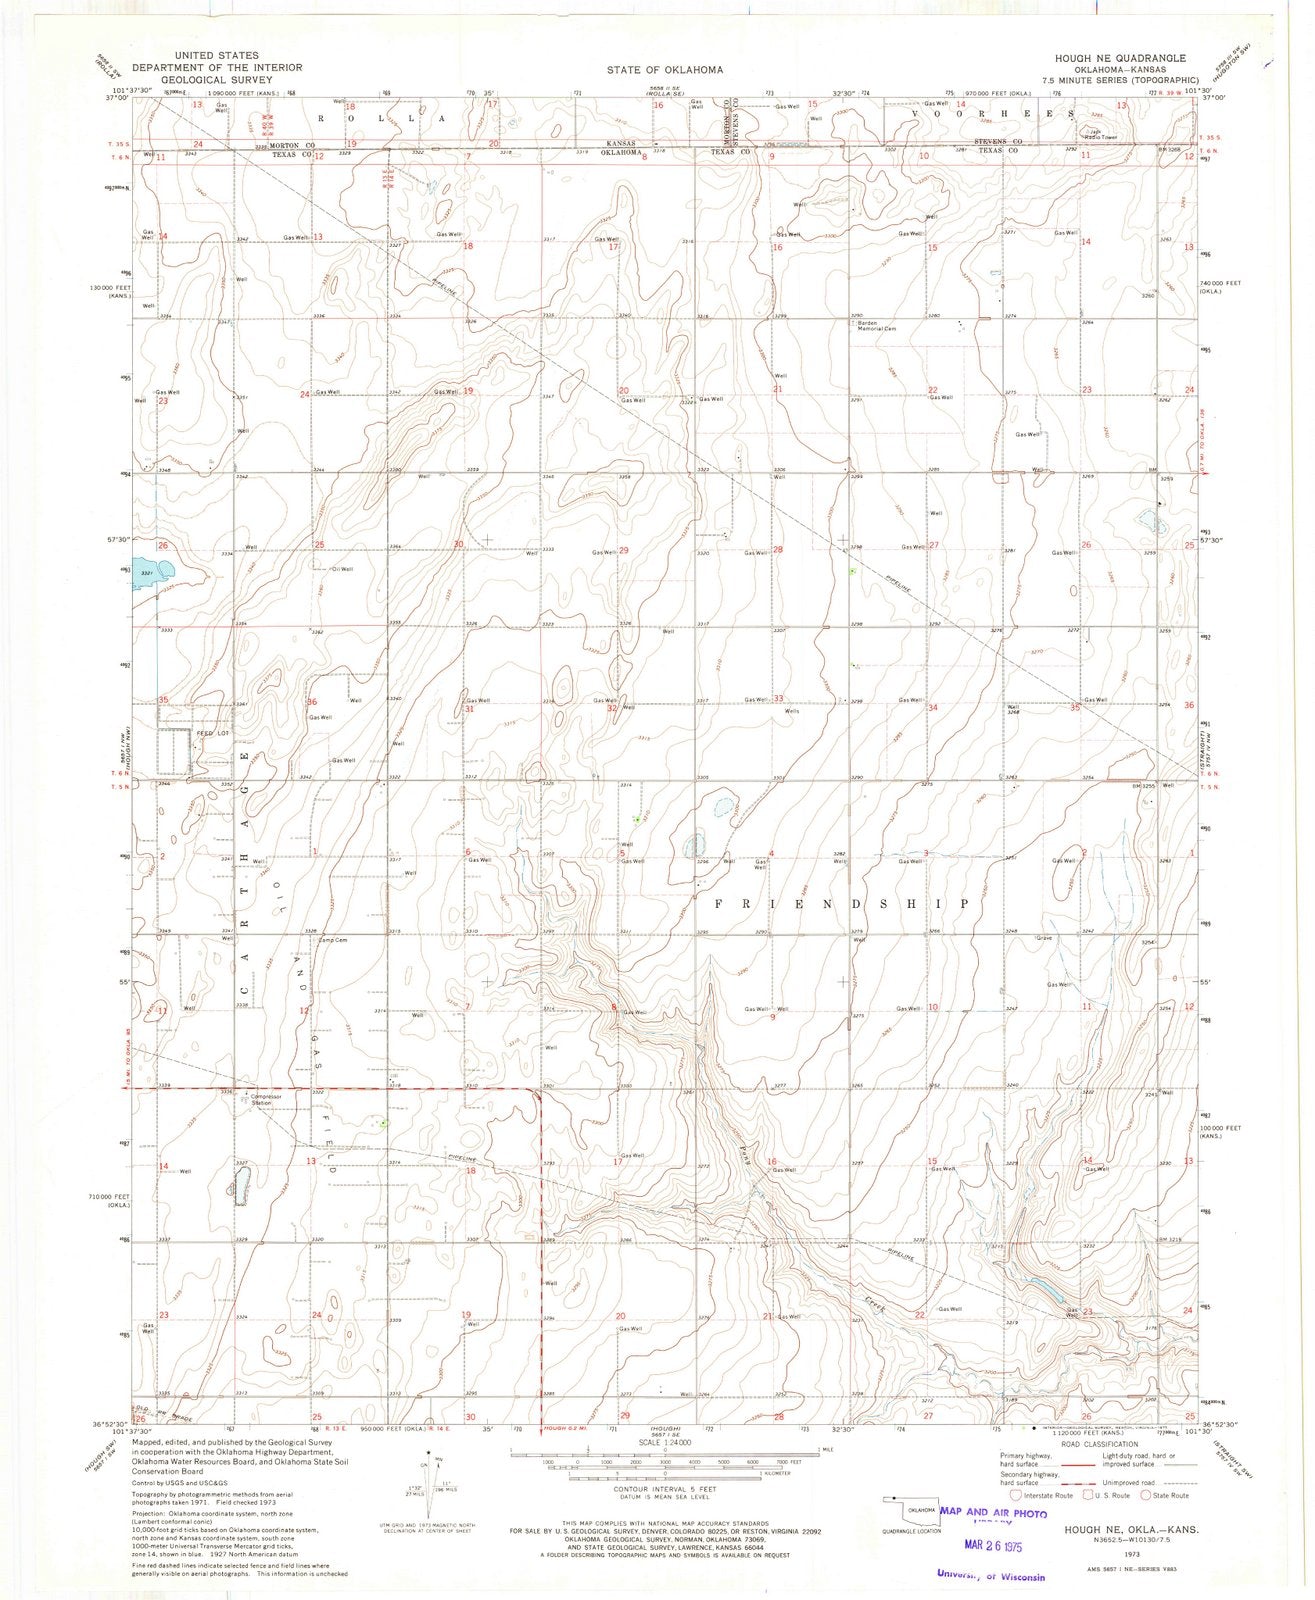 1973 Hough, OK - Oklahoma - USGS Topographic Map